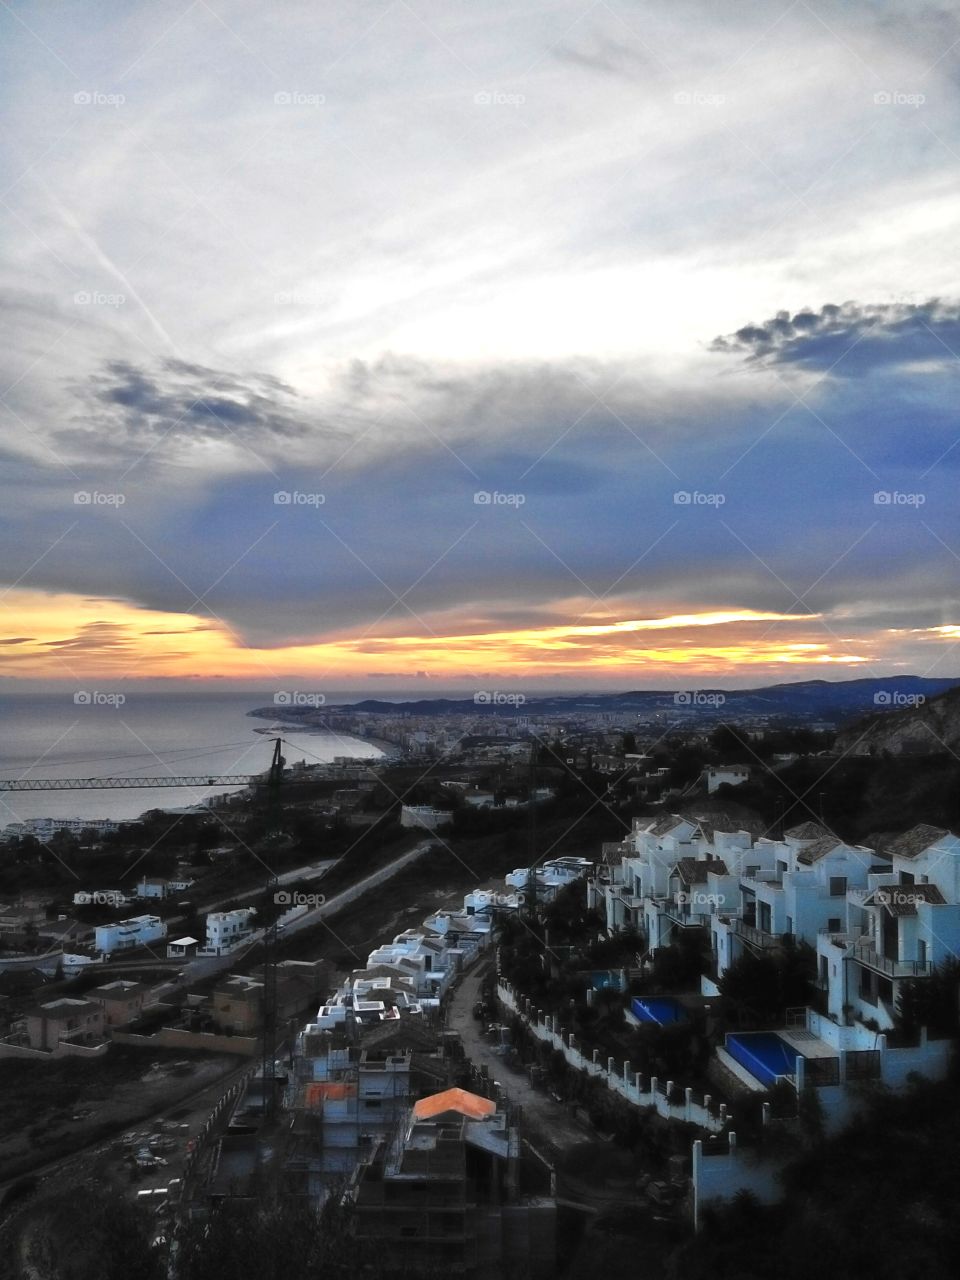 Sunset at Costa del Sol